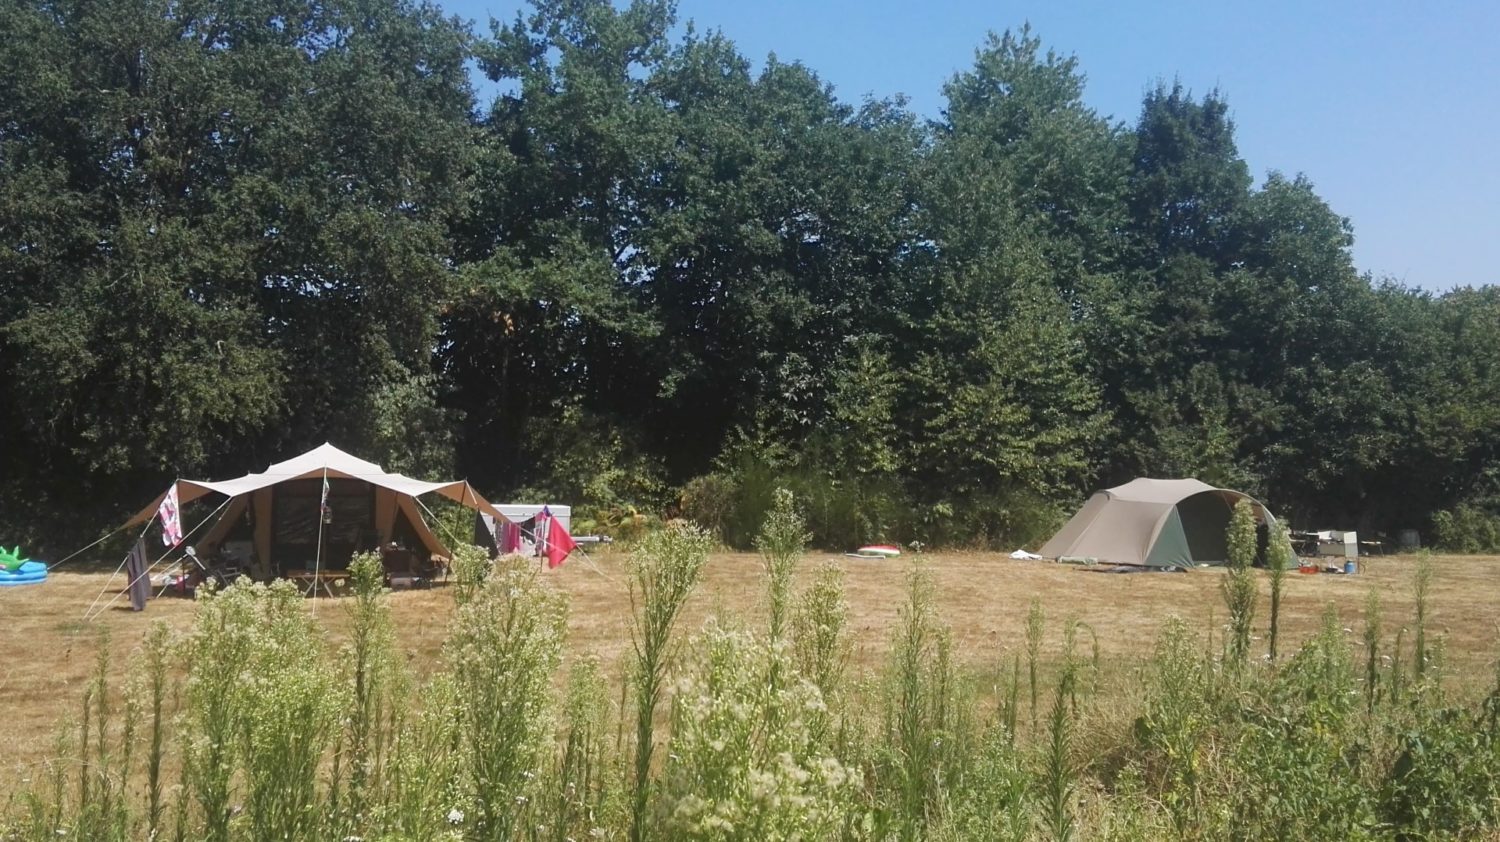 A spacious campsite